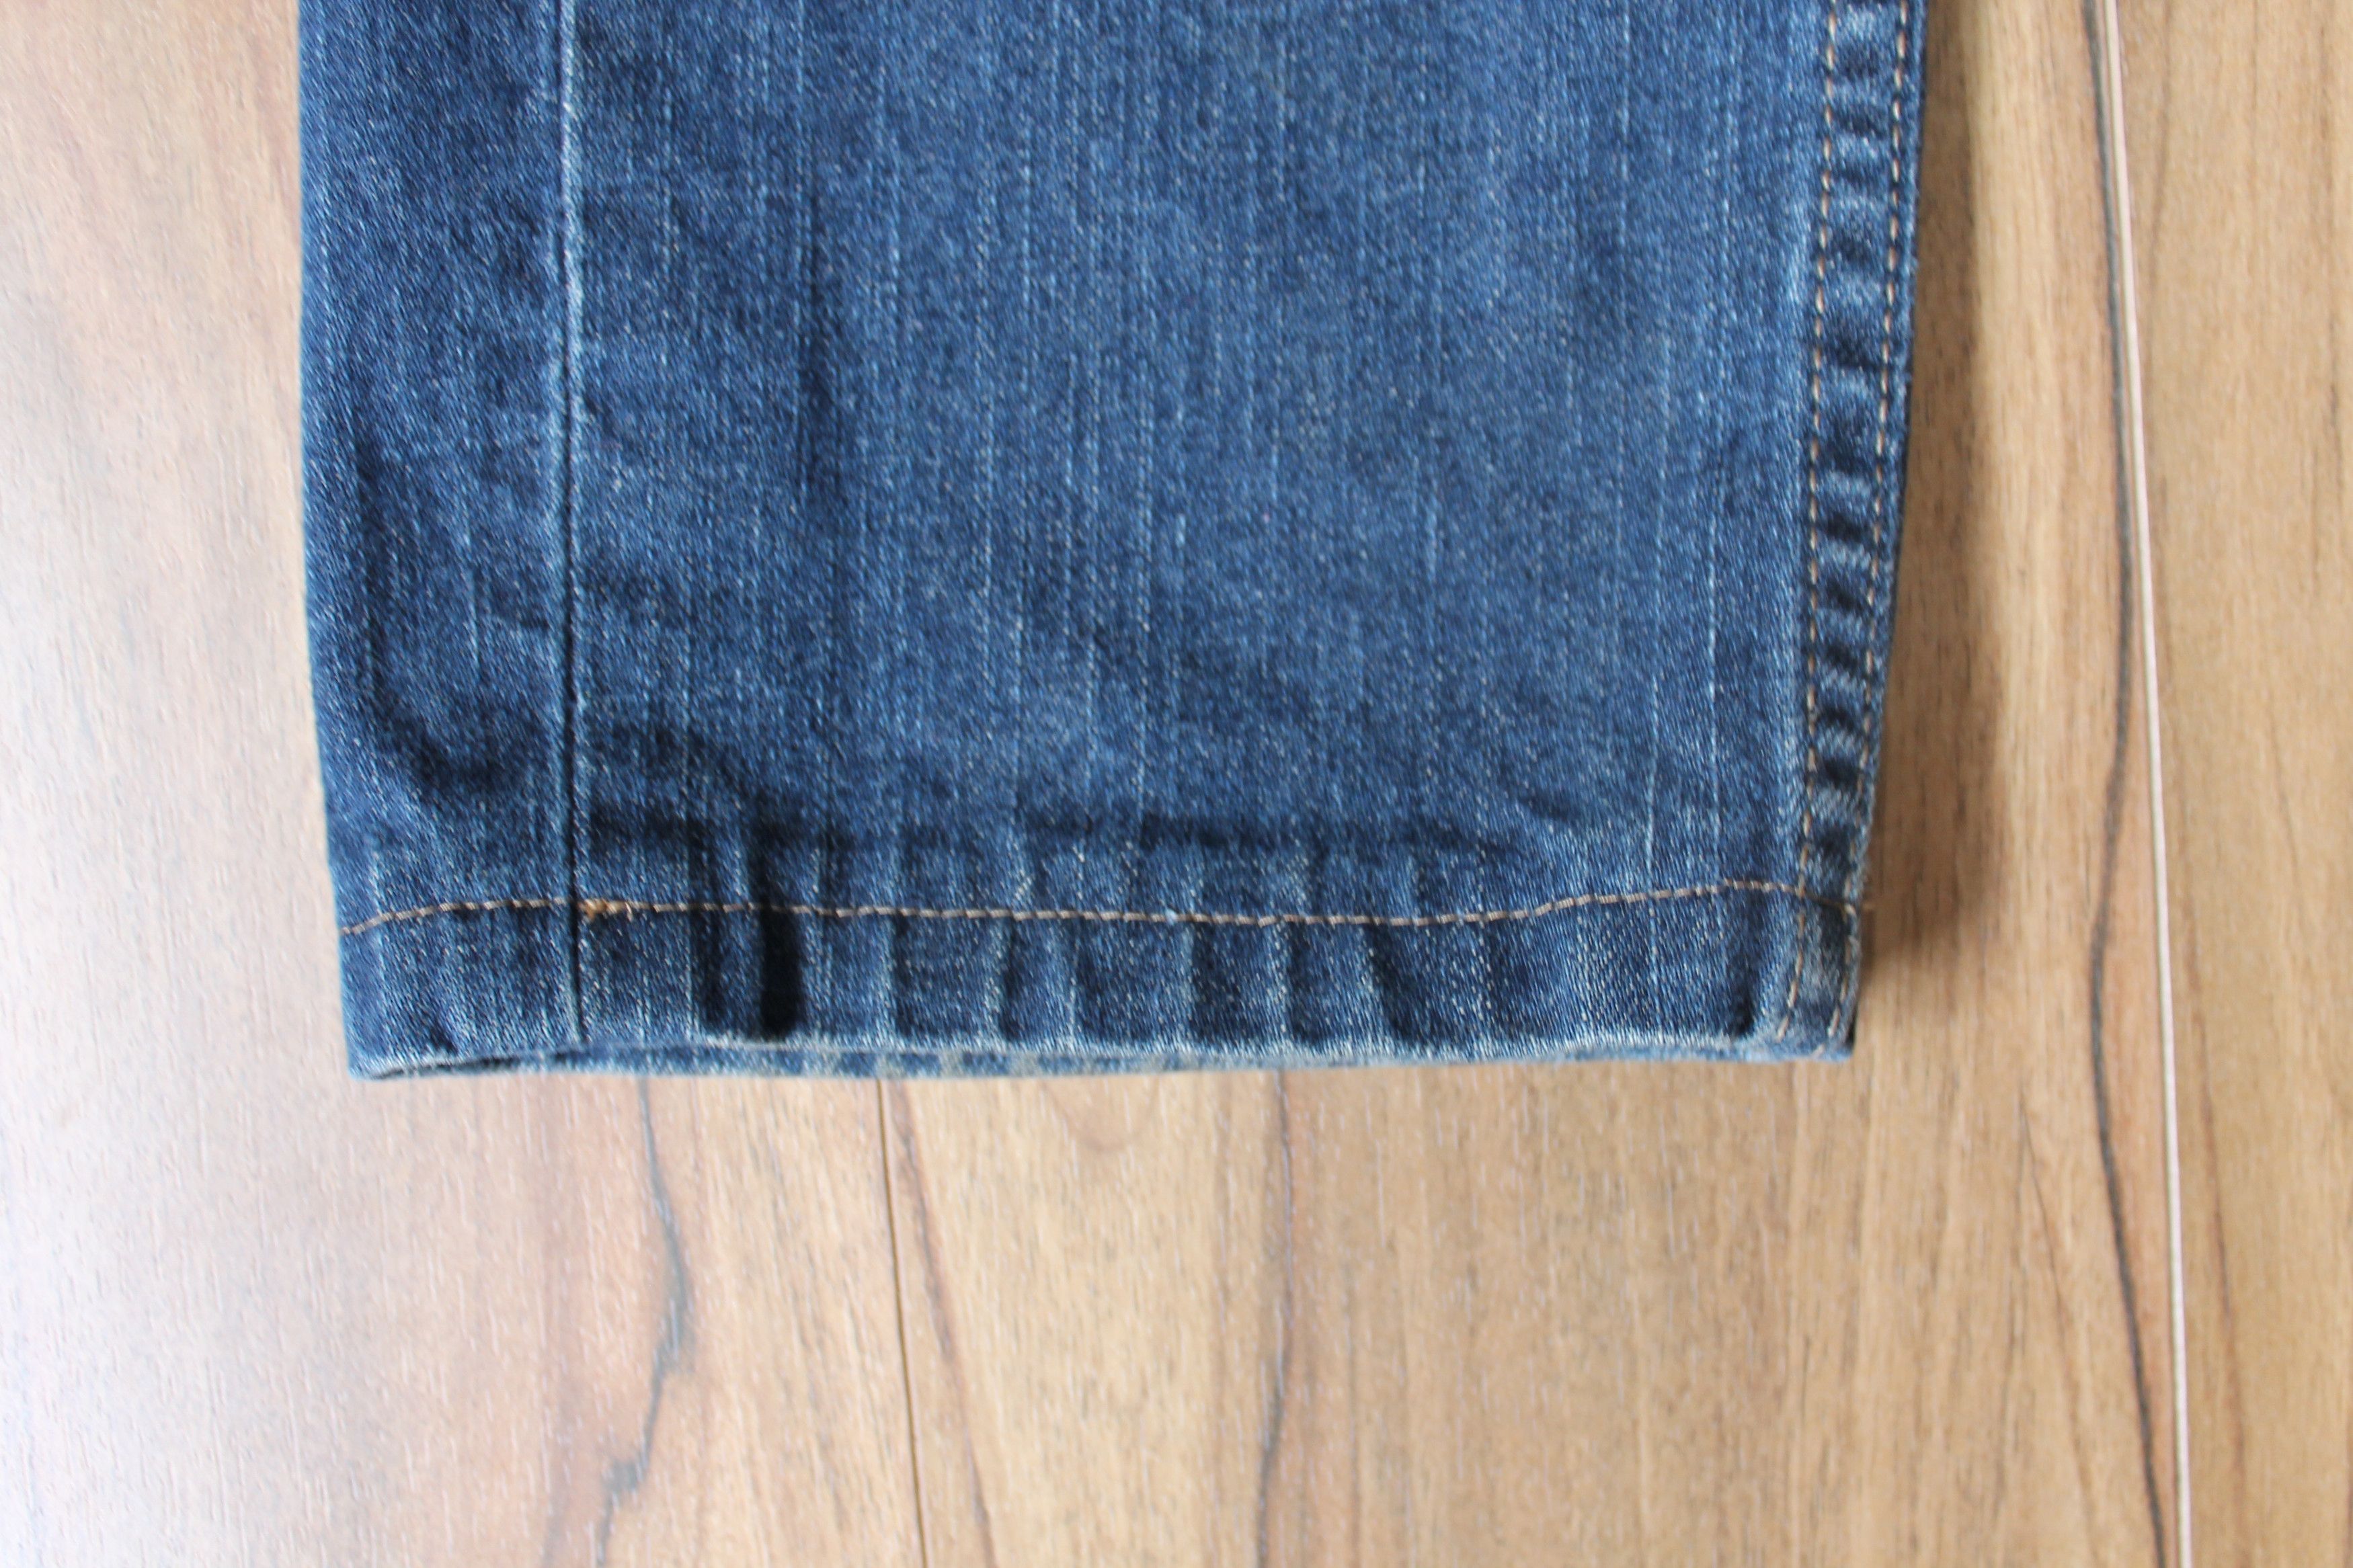 Levi's Navy Blue Levi's 511 Selvedge Denim Jeans (29x30) Size US 29 - 5 Thumbnail